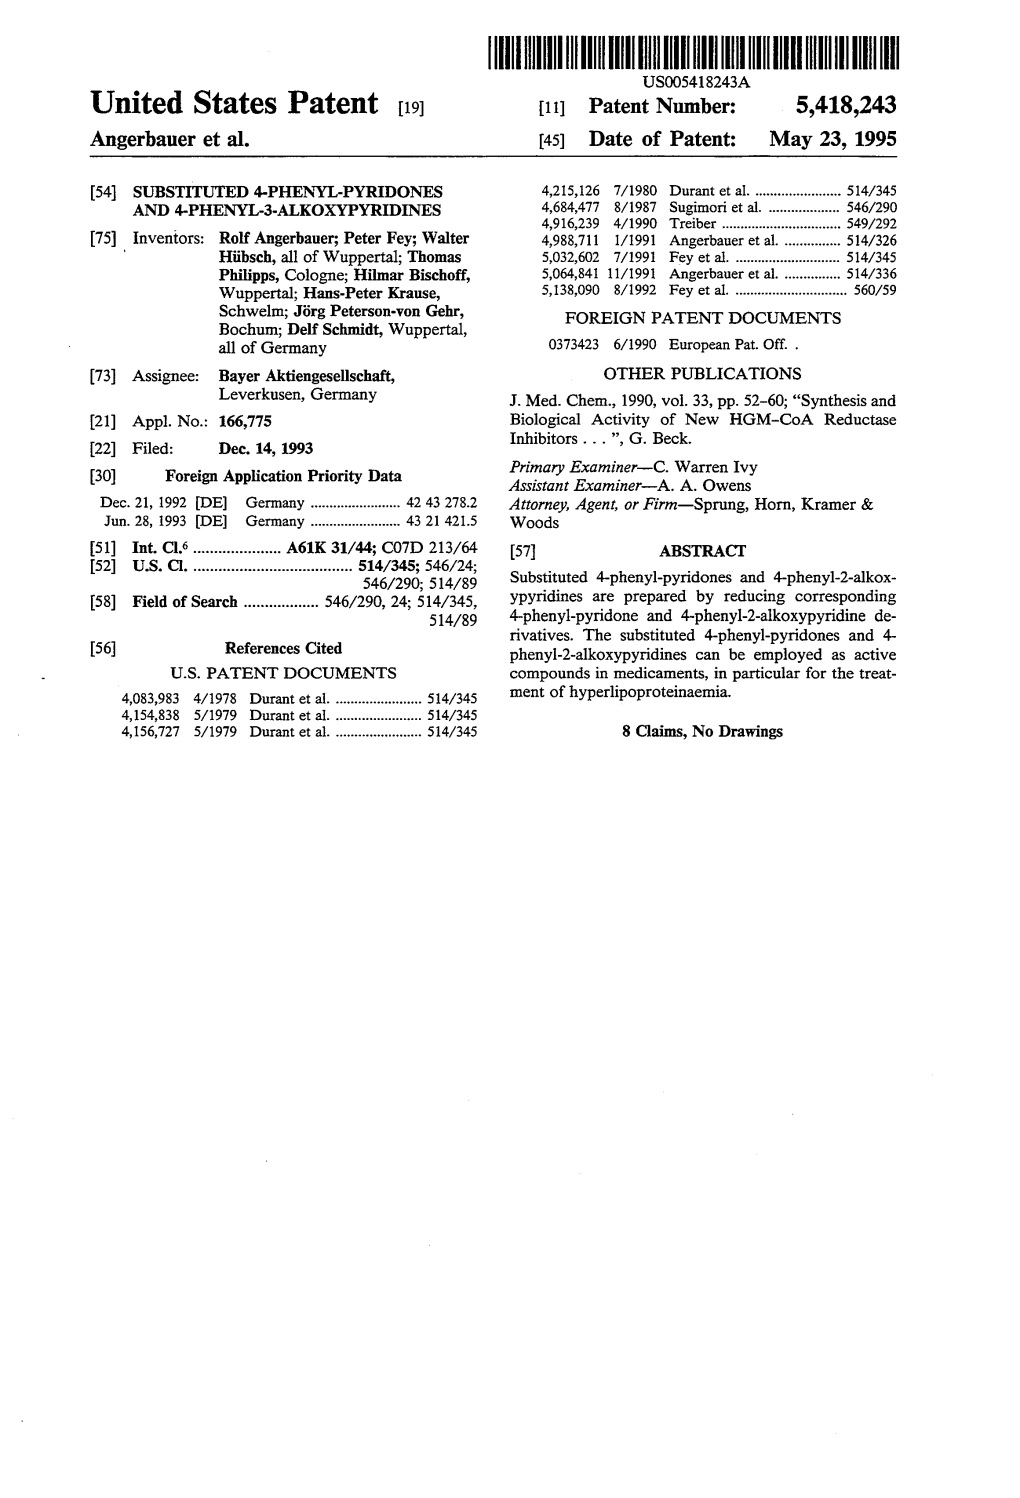 United States Patent 19 11 Patent Number: 5,418,243 Angerbauer Et Al